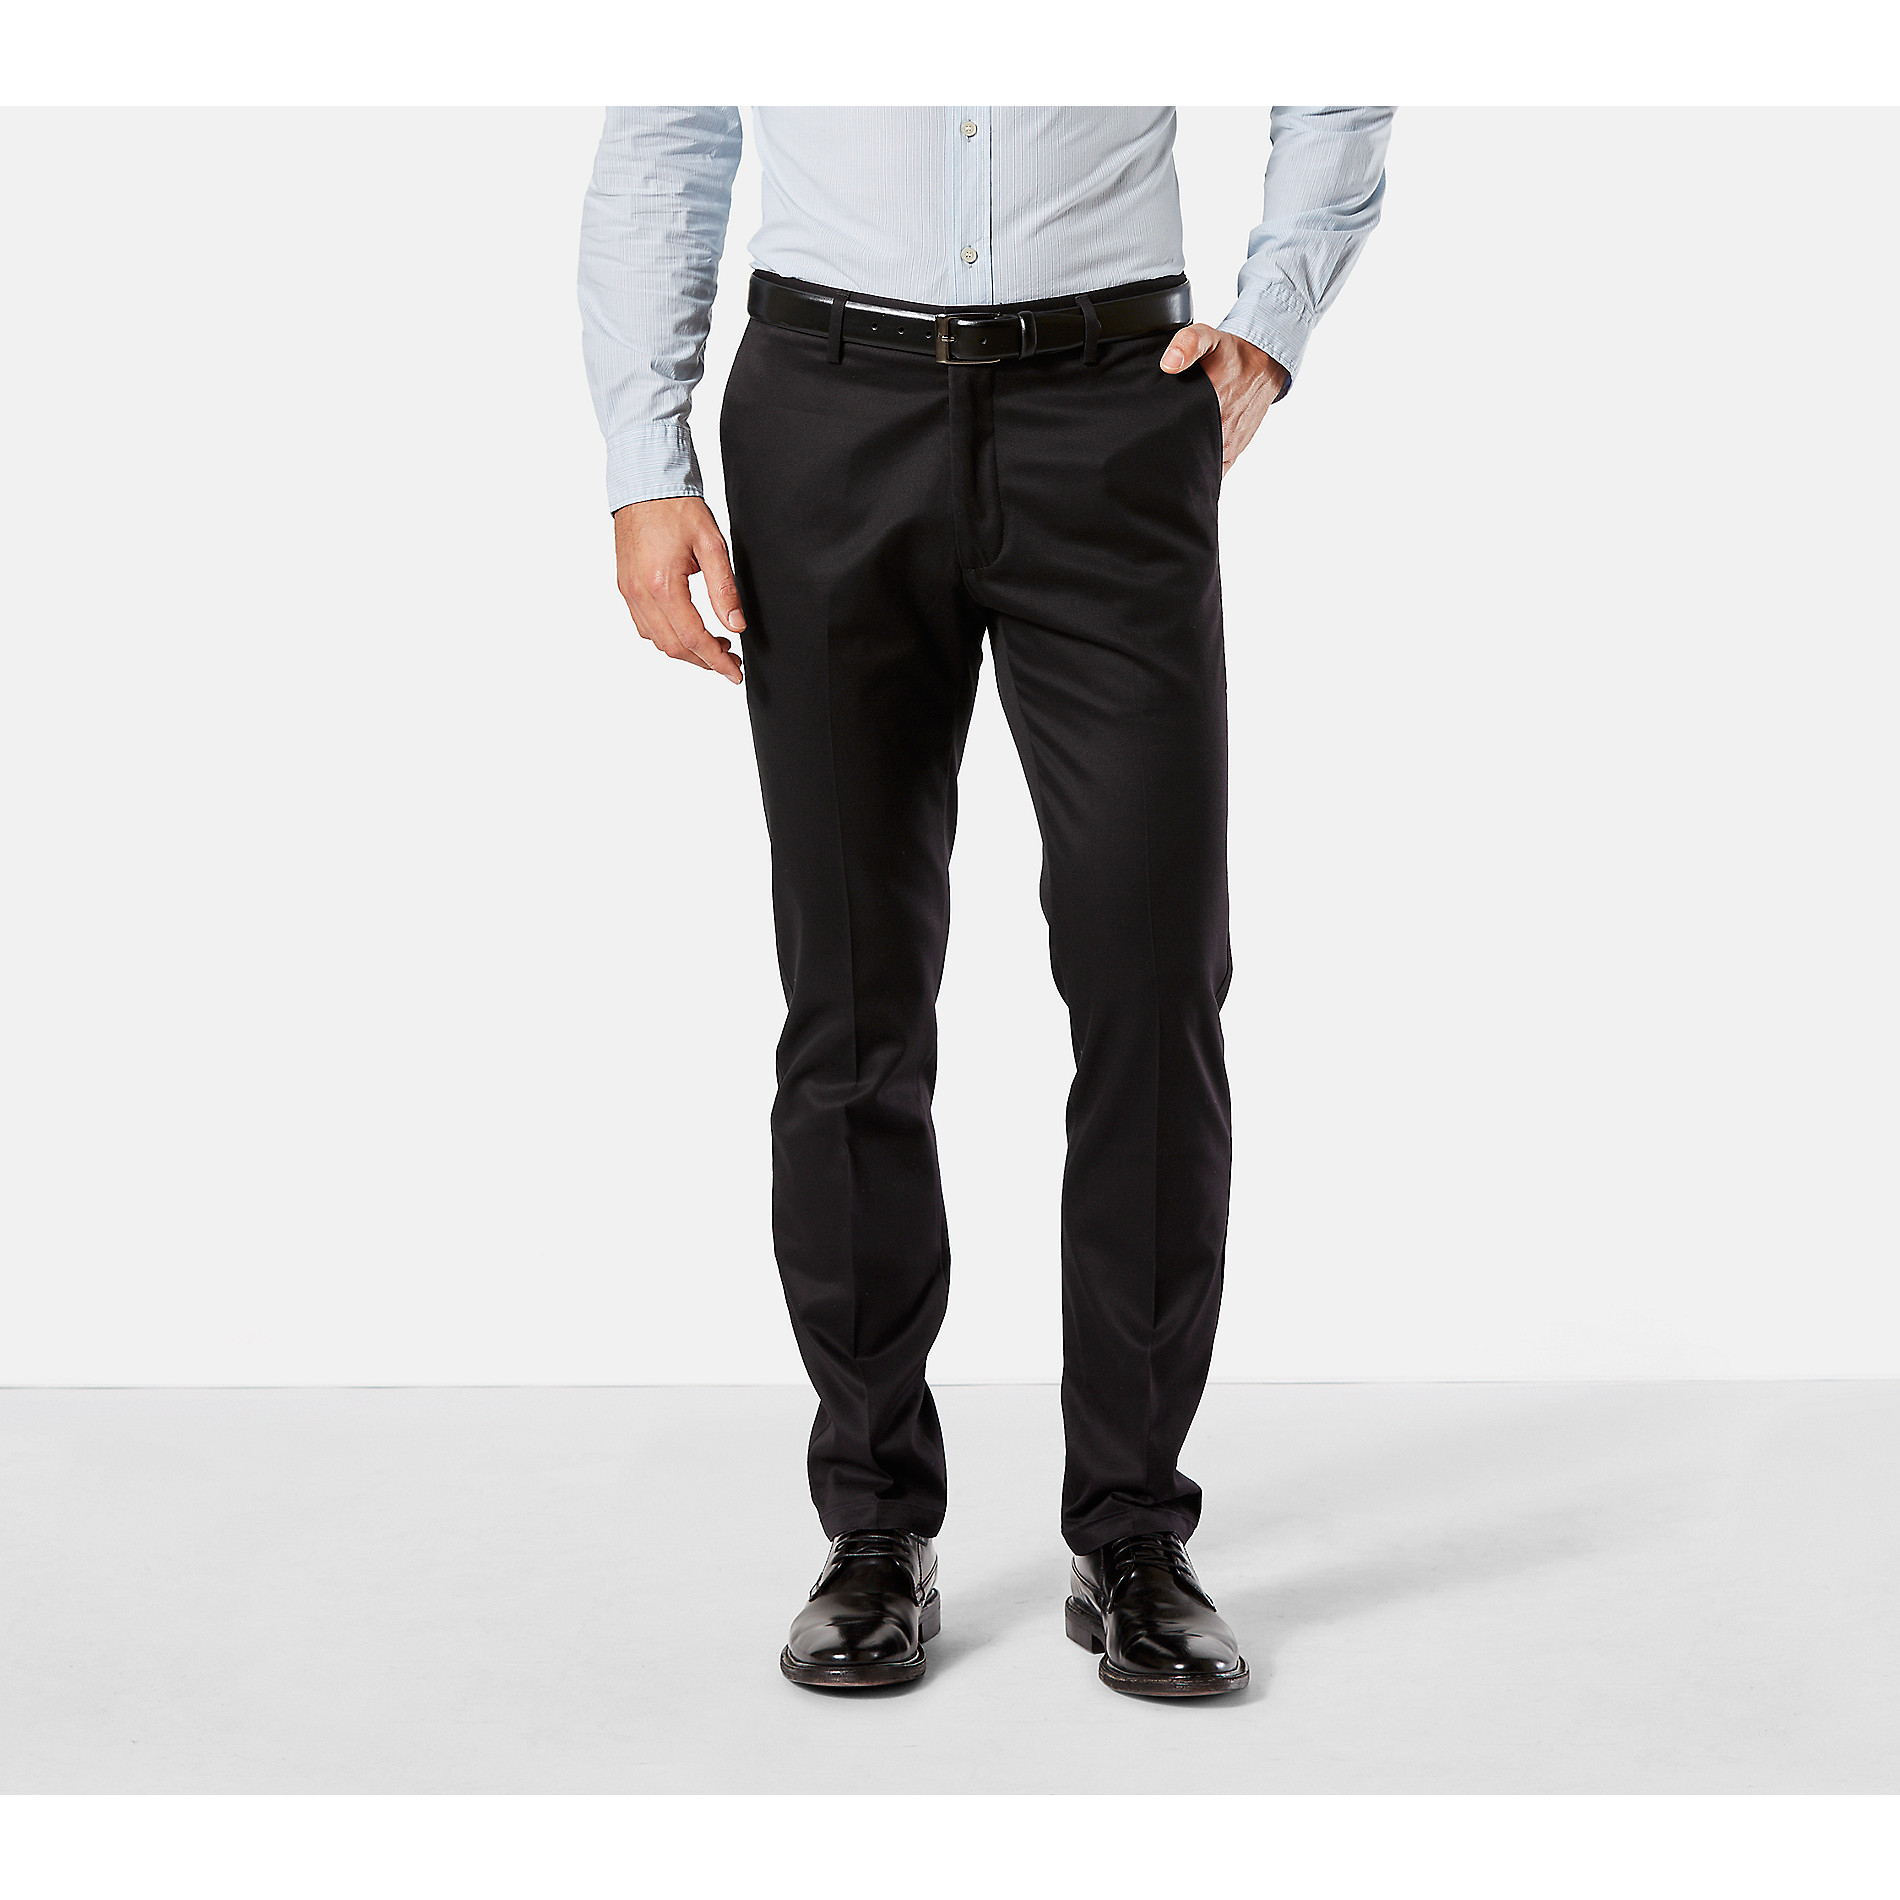 Dockers Men's Slim Tapered Fit Signature Khaki Pants